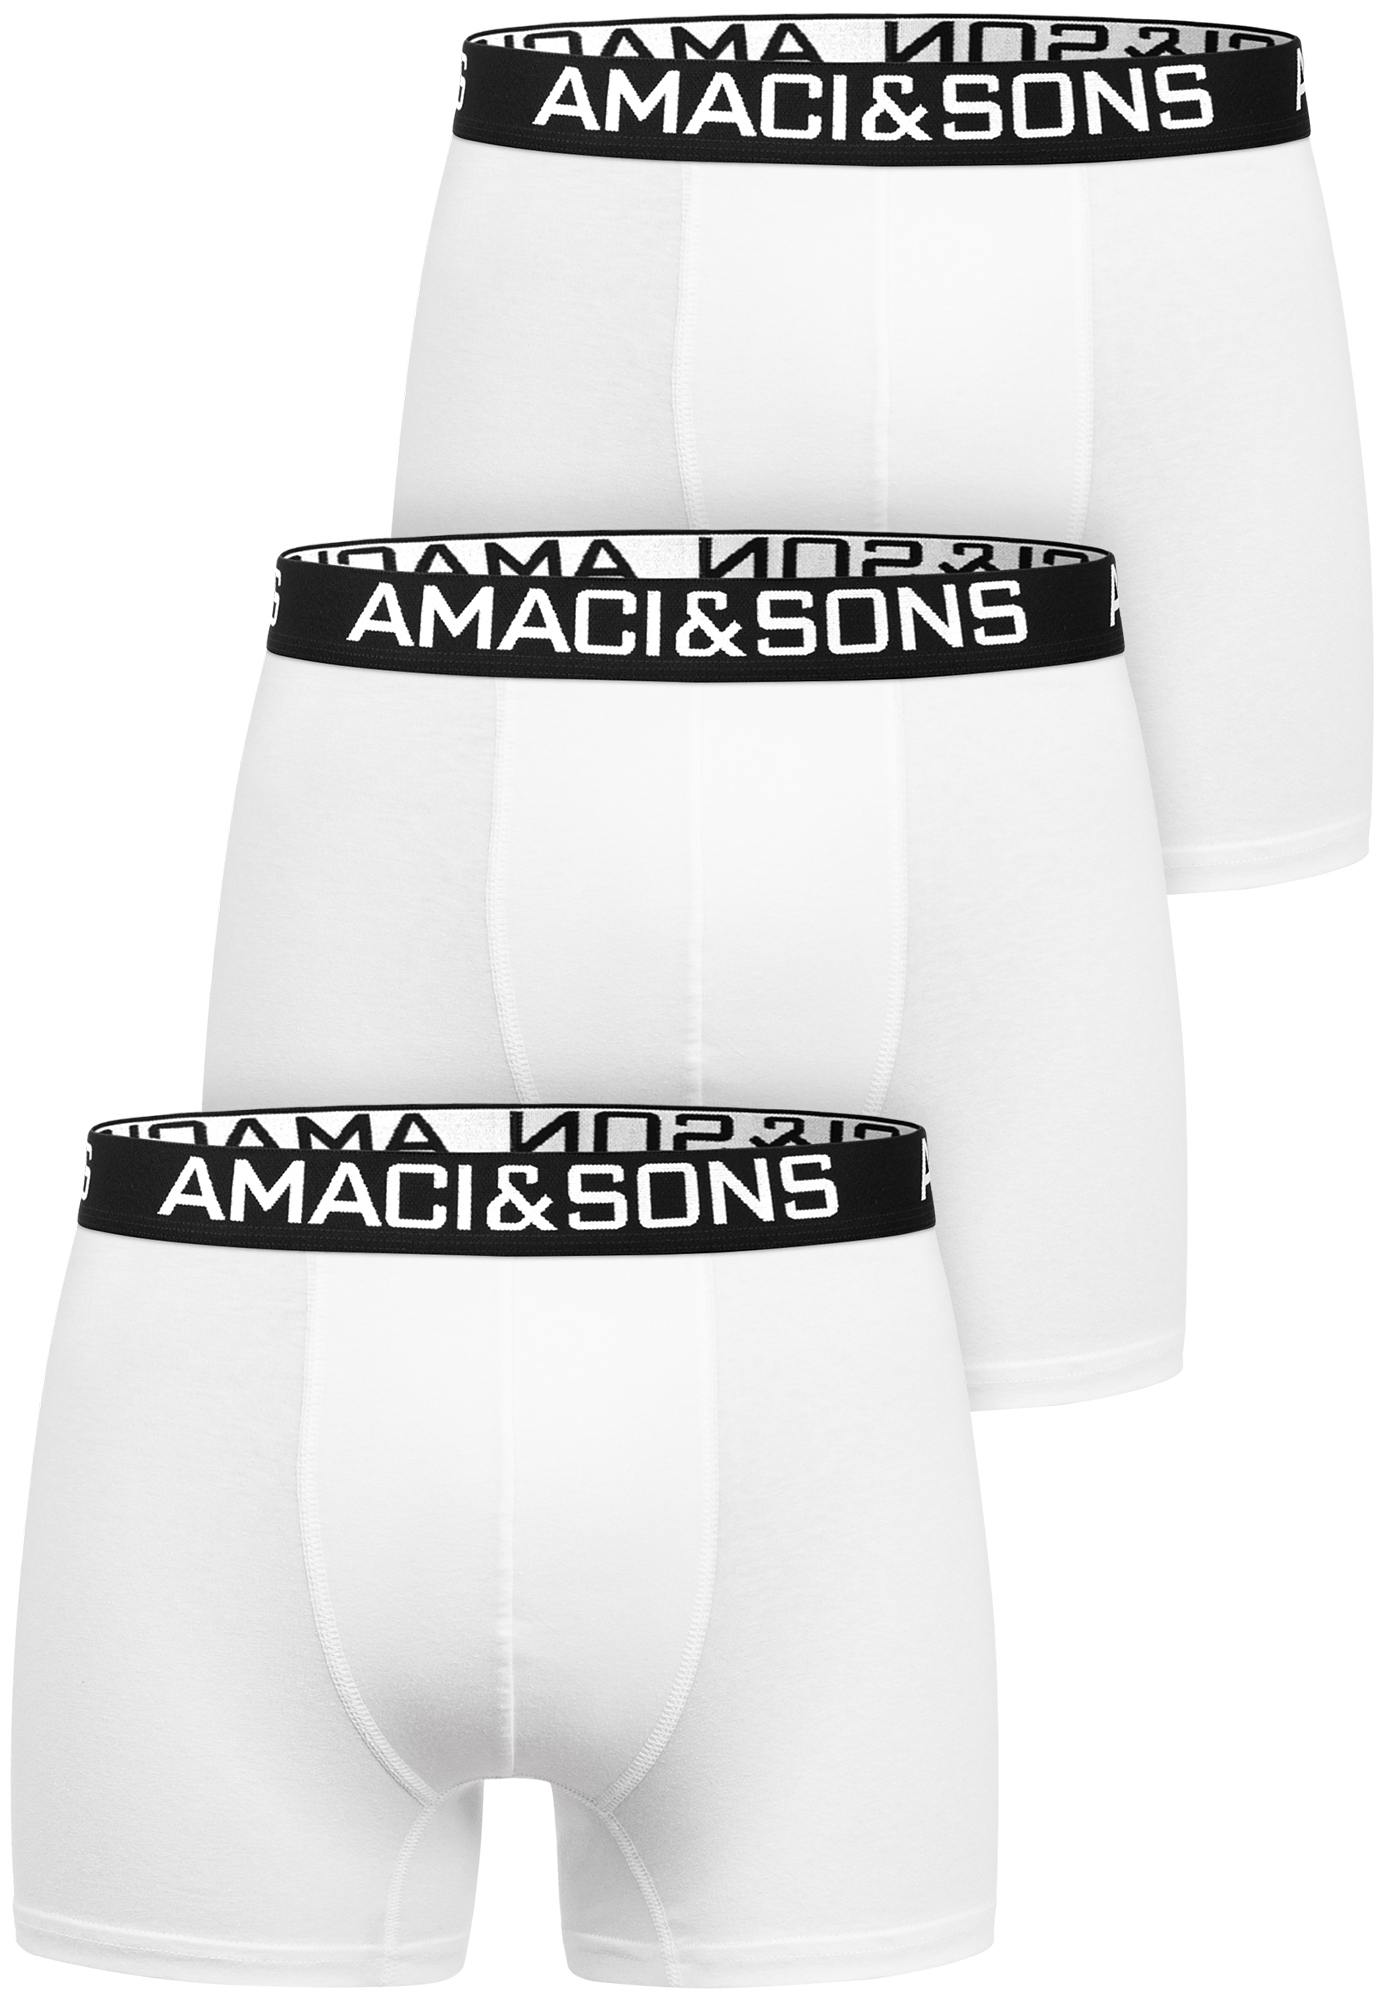 Боксеры Amaci&Sons 3 шт, белый